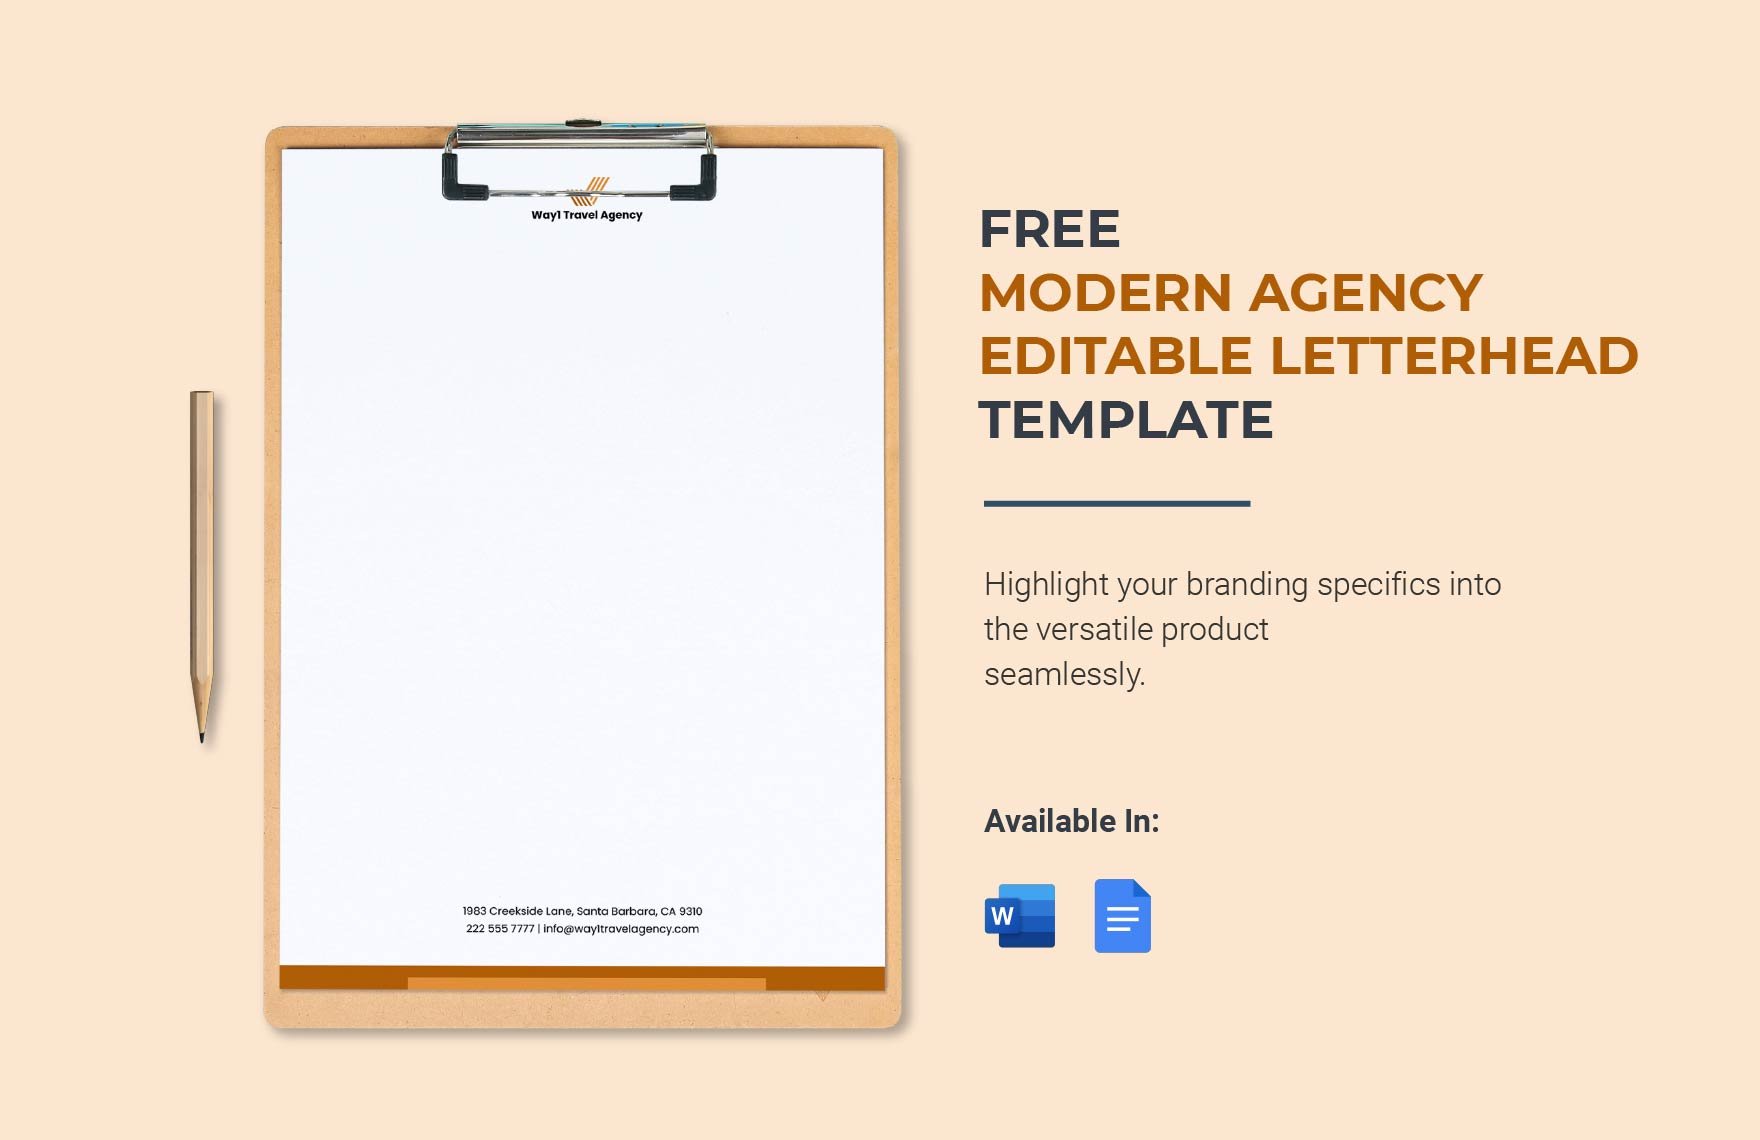 Free Modern Agency Editable Letterhead Template in Word, Google Docs